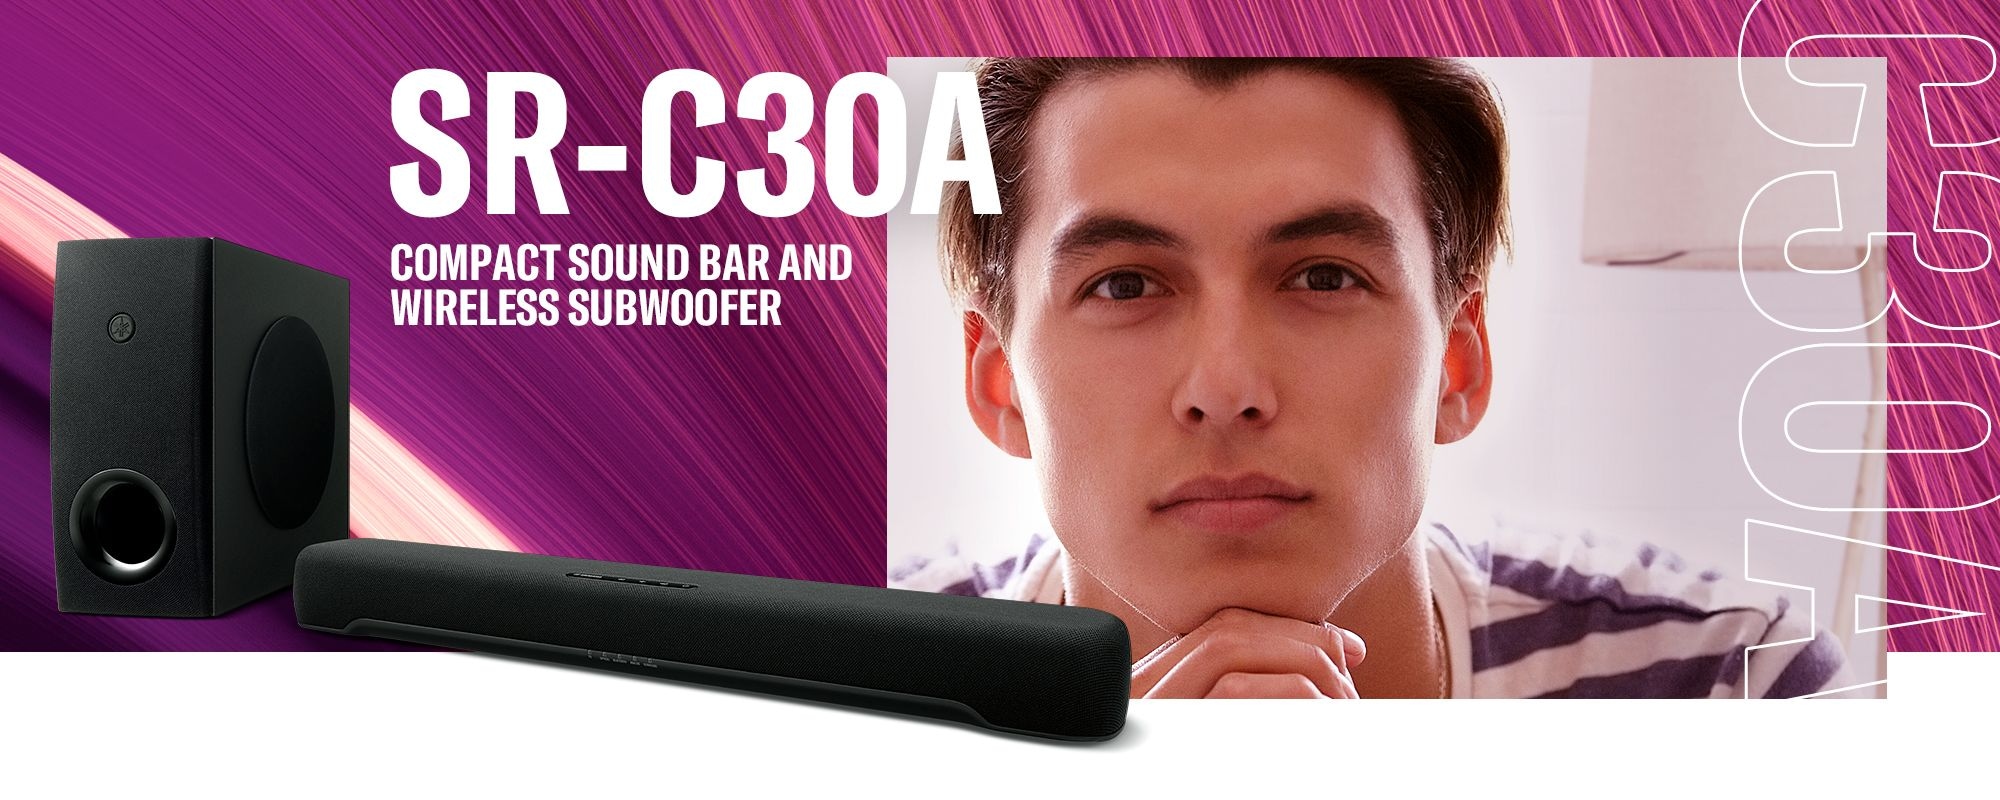 Yamaha SR-C30A Compact Sound Bar with Wireless Subwoofer Header Image - Desktop